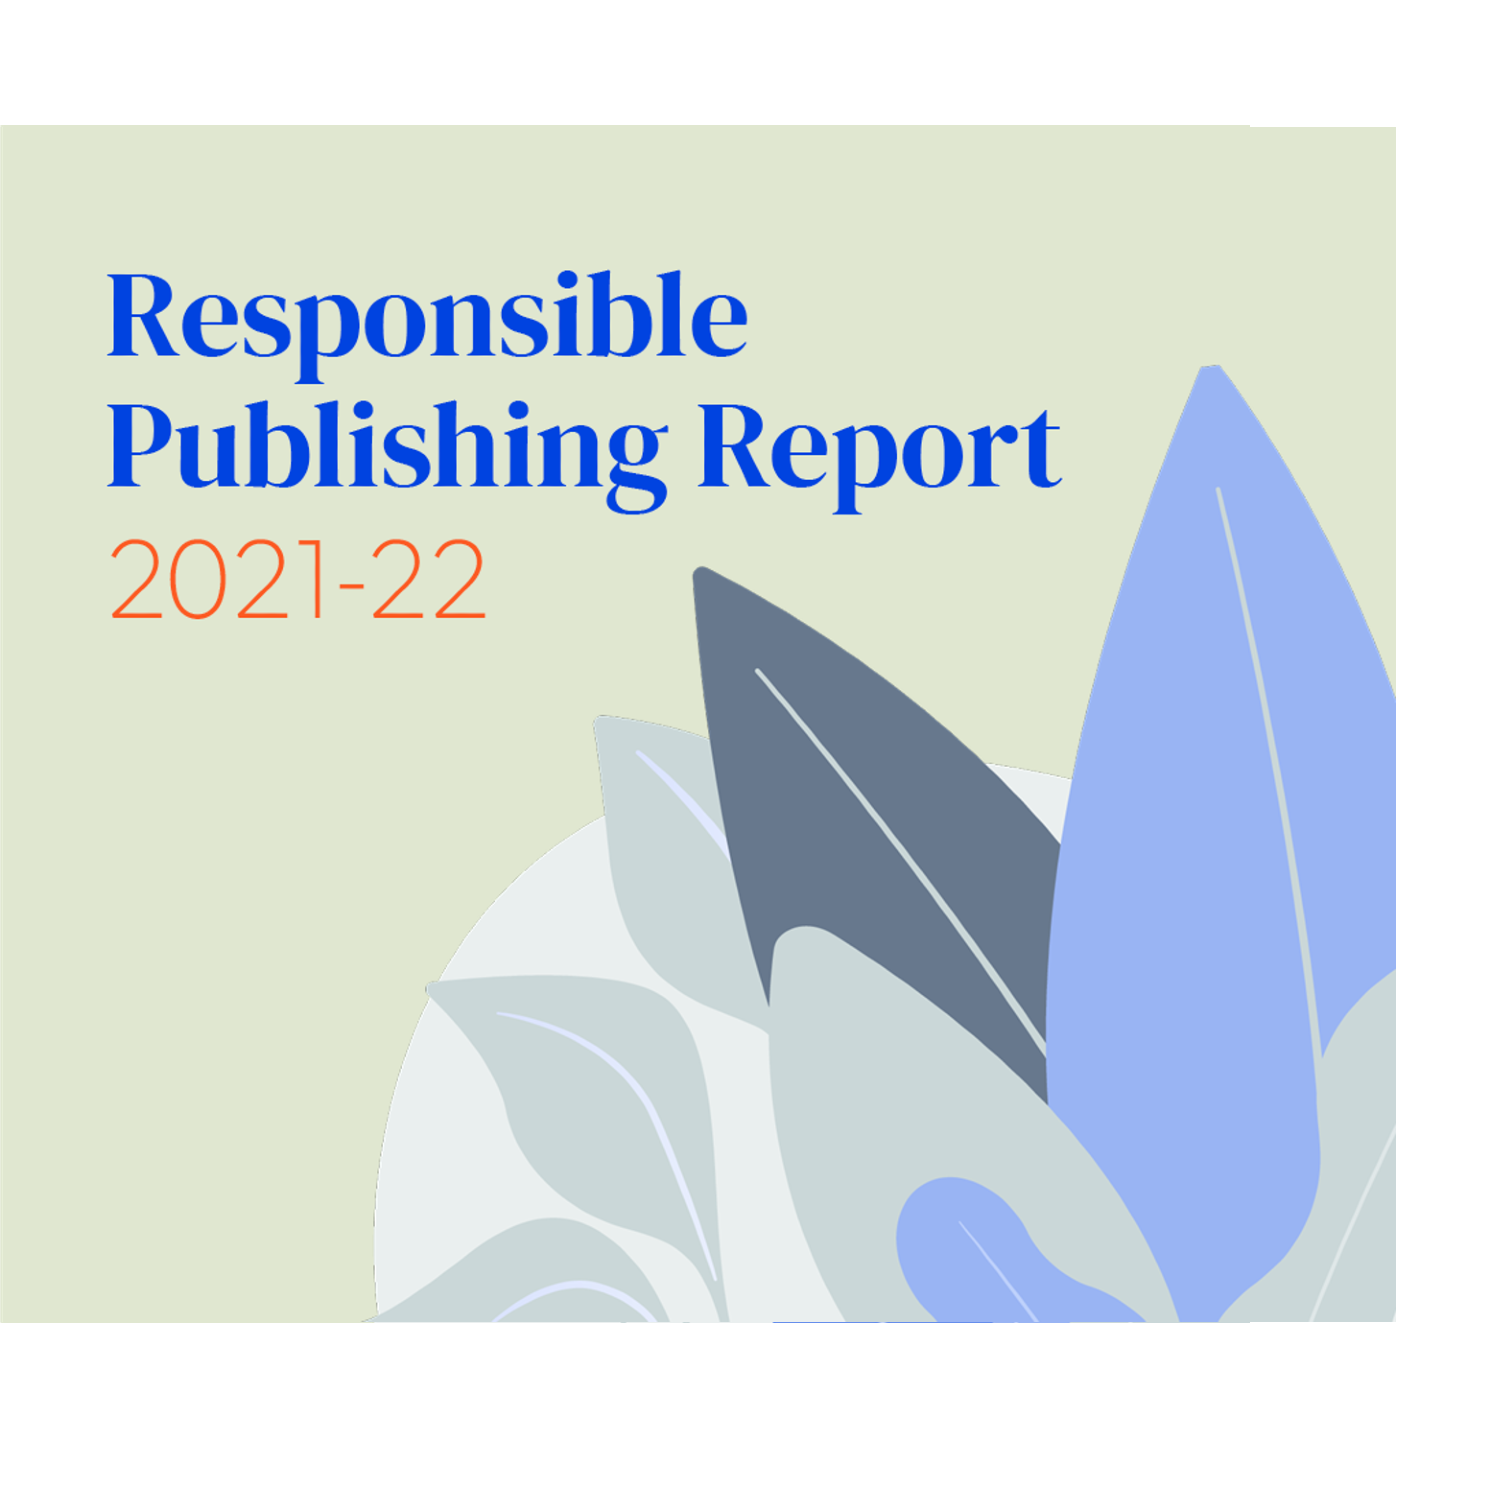 Responsible Publishing Report 2021-22